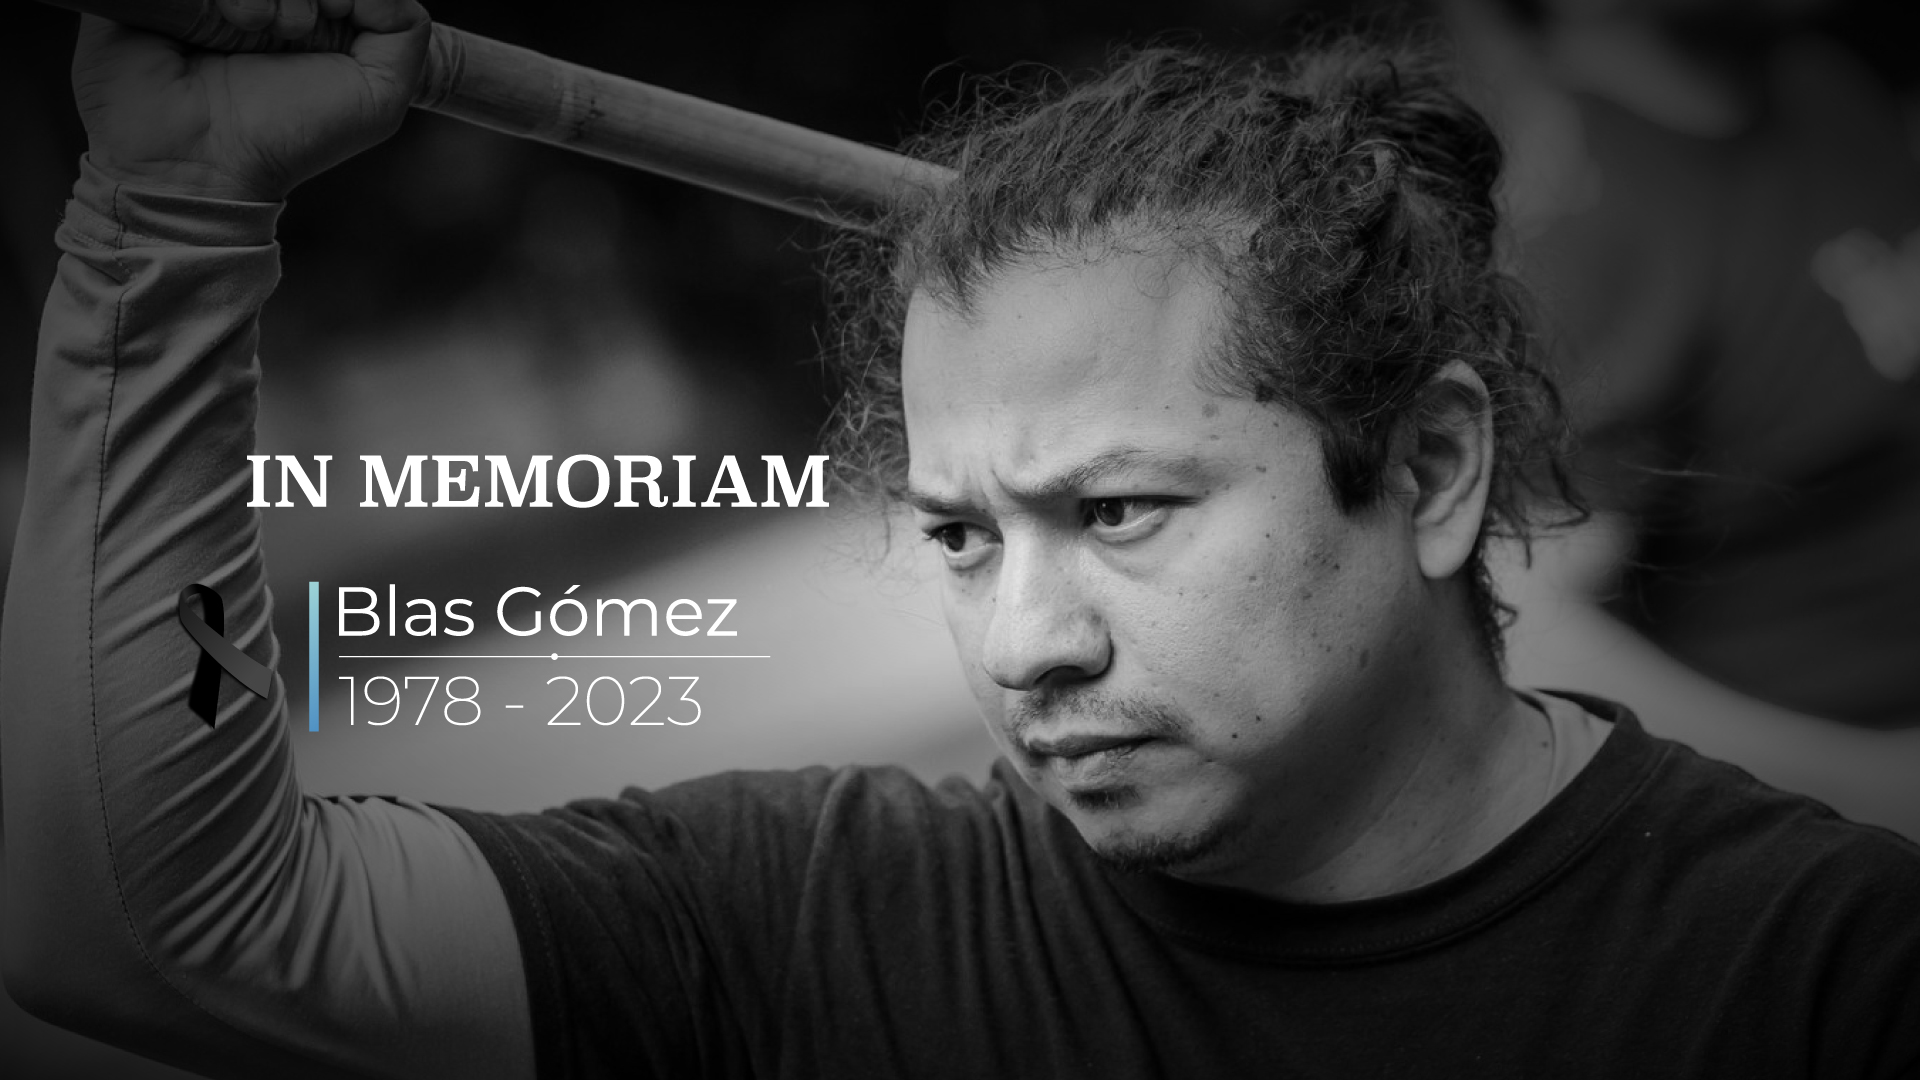 In memoriam: Blas Gómez